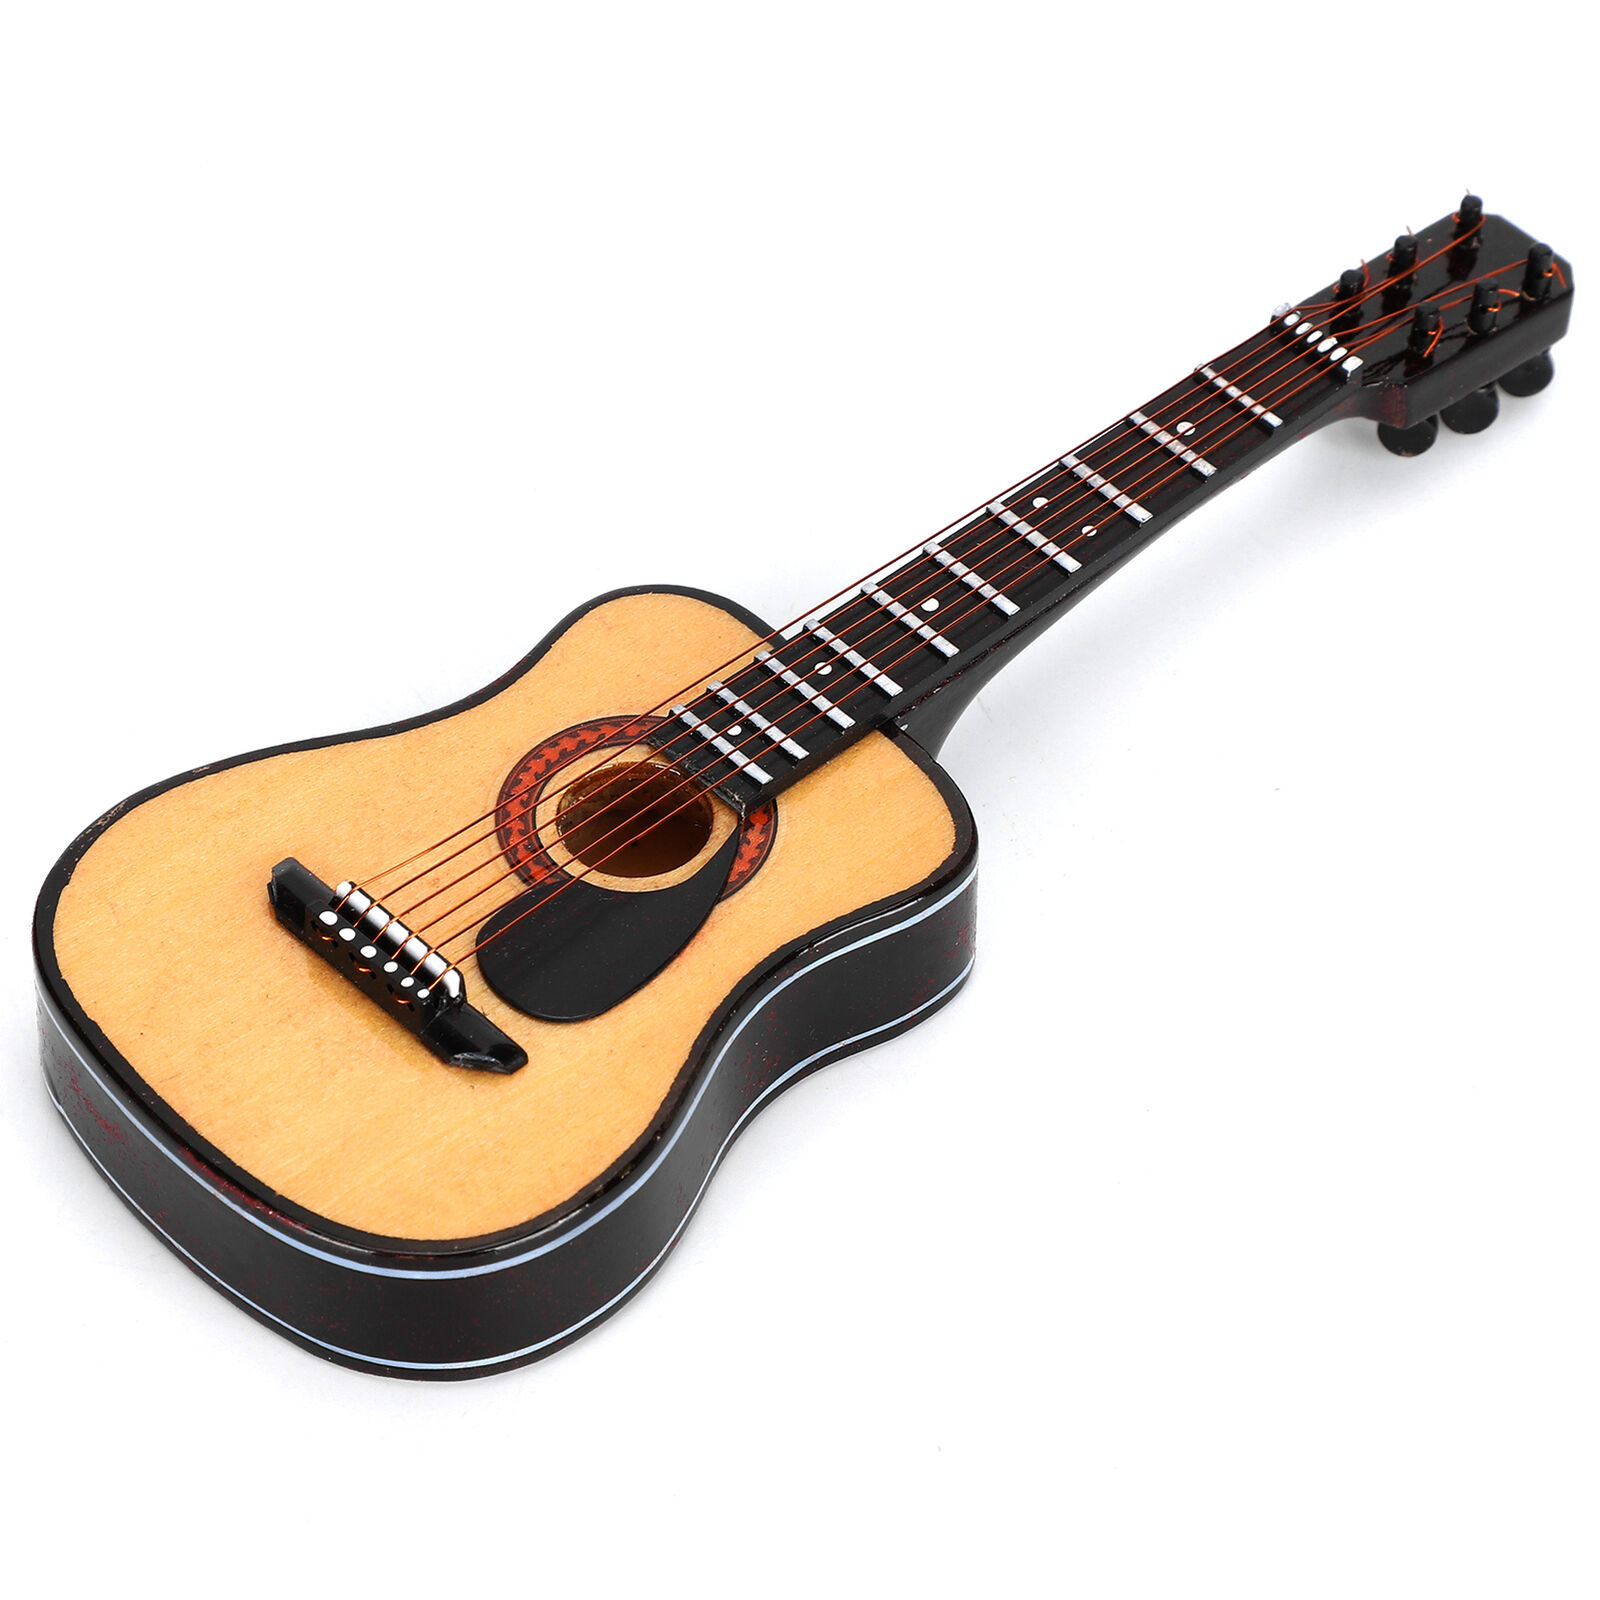 Mininature Guitar Decoration Mini Musical Instrument For Anniversary Gift